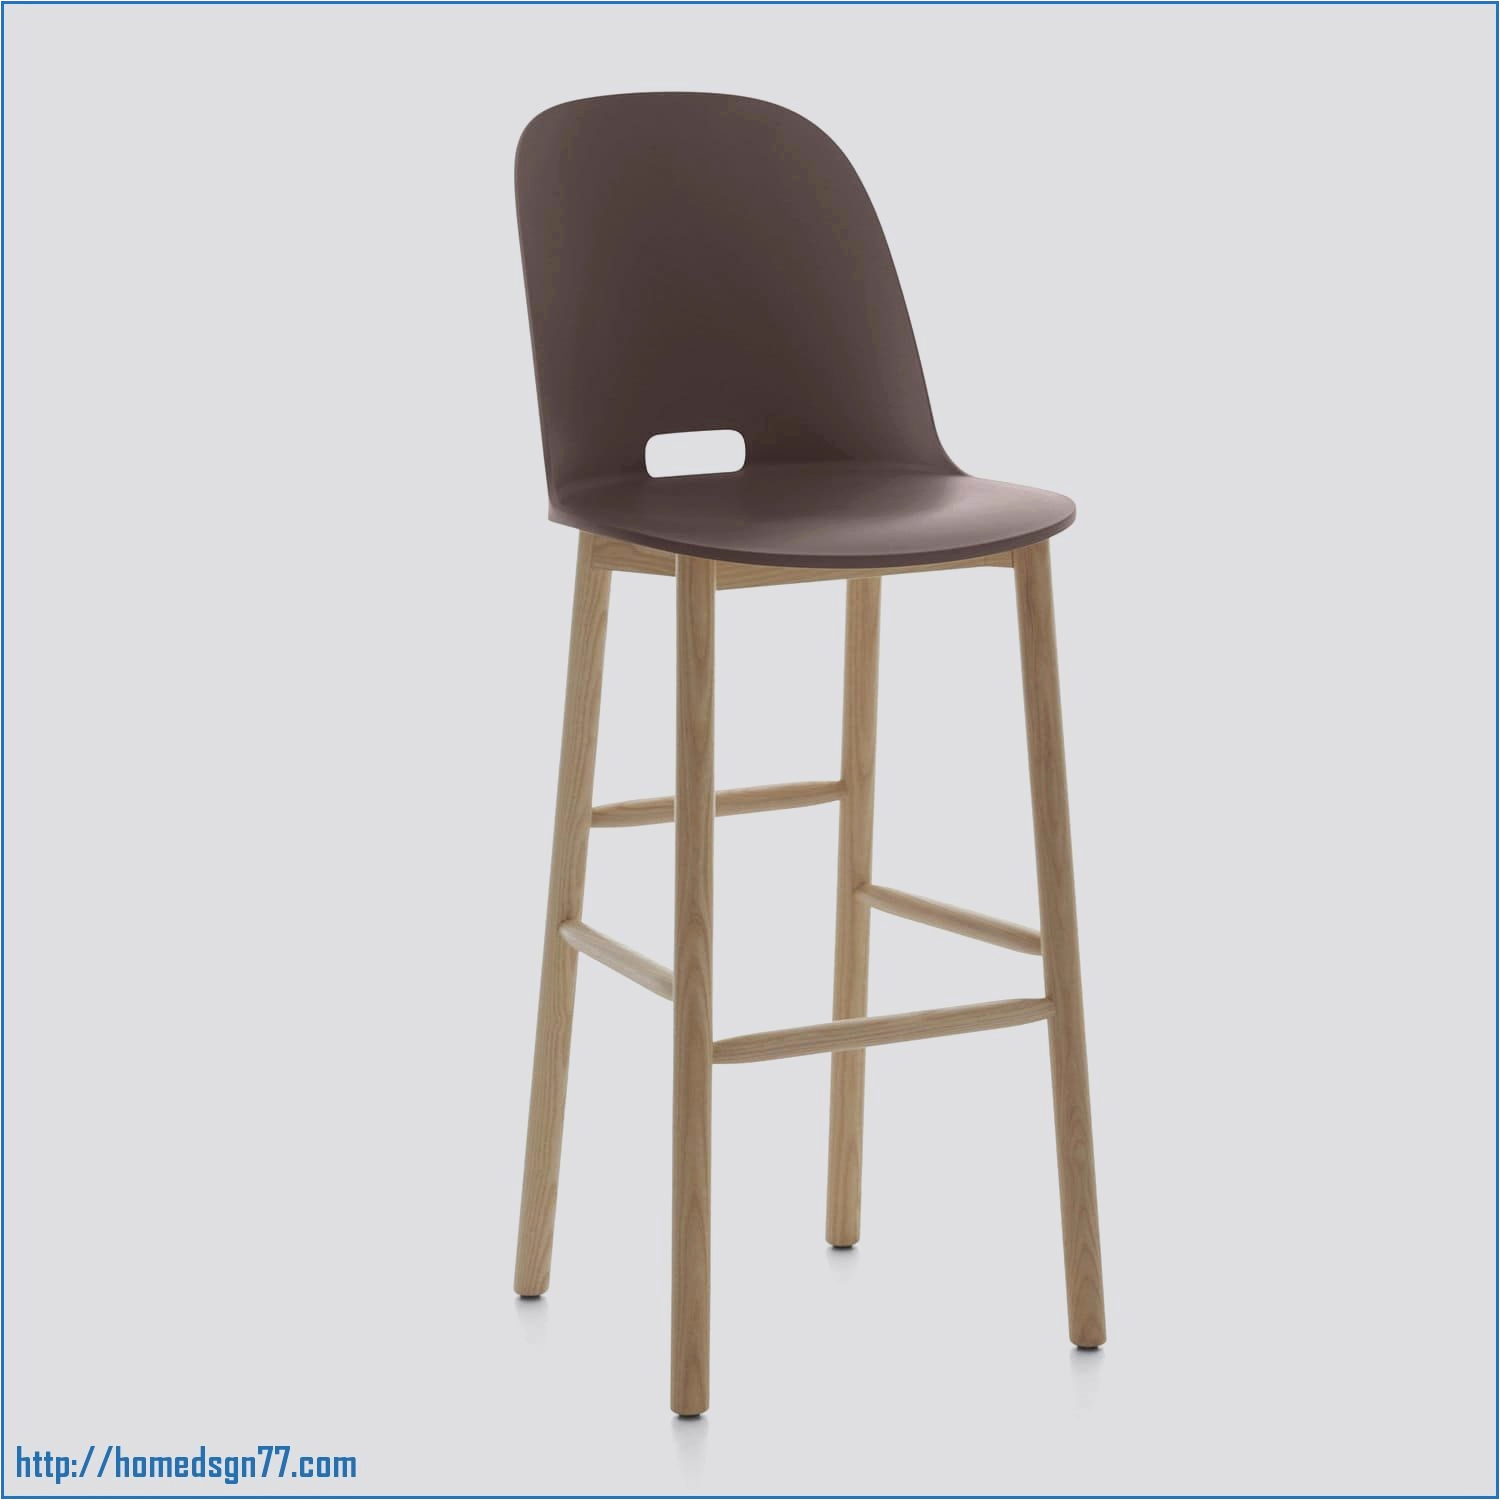 chaise bistrot alinea beau fauteuil osier conforama luxe concernant chaise bistrot alinea beau fauteuil osier conforama luxe pour bureau accueil of